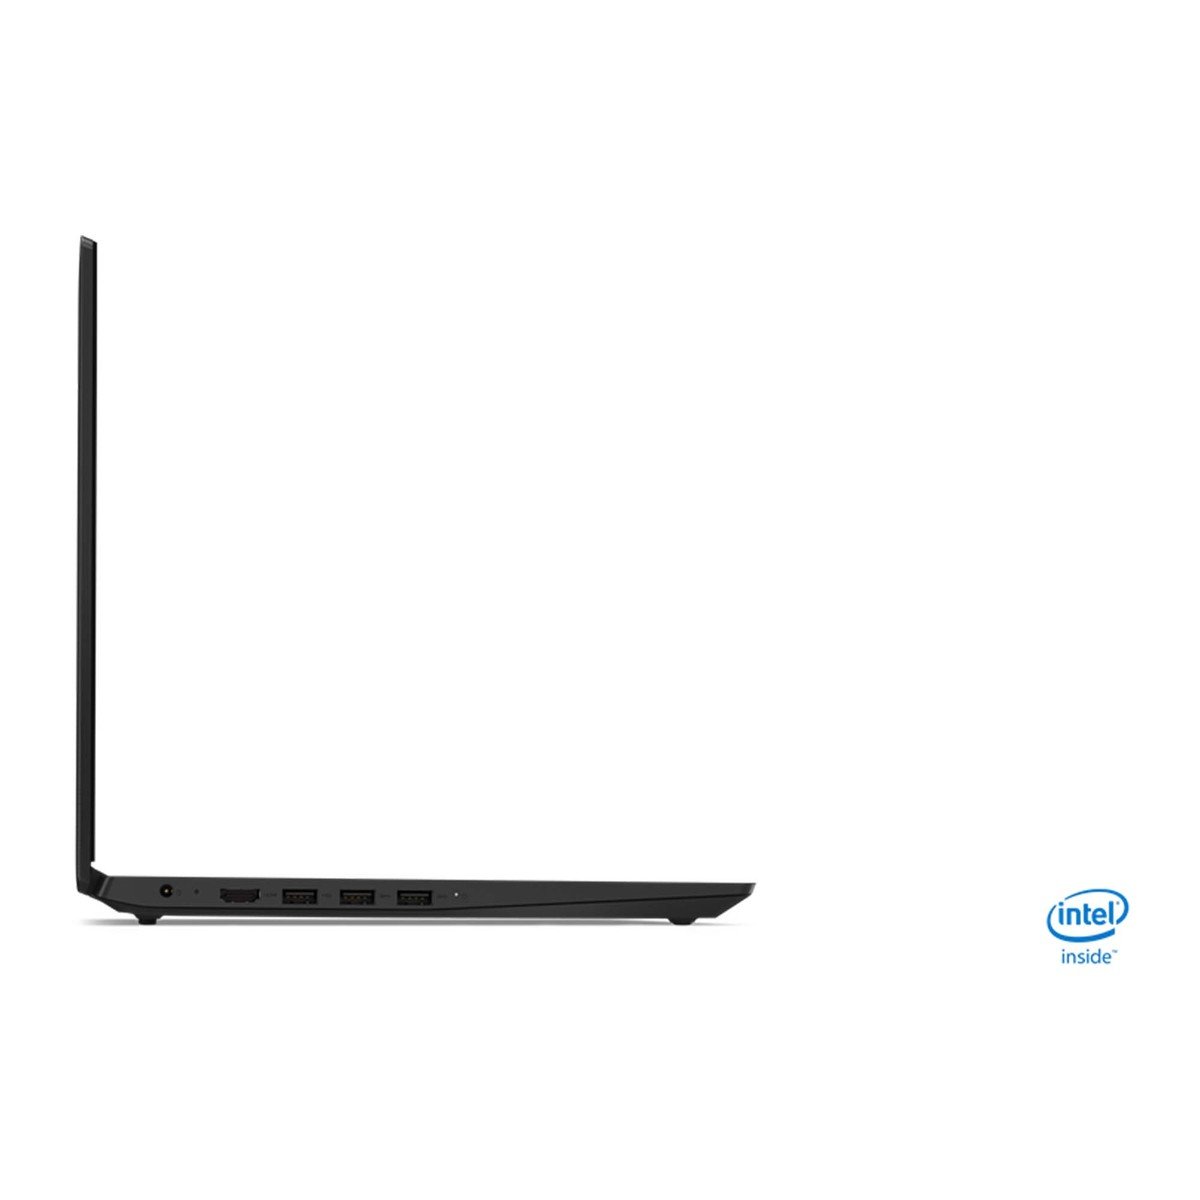 Lenovo  Ideapad S145-81VD0087AX 15 Inch LED Laptop,Intel i3-8130U 2.3 GHz, 4 GB RAM, 1TB HDD, Windows 10 ,Granite Black